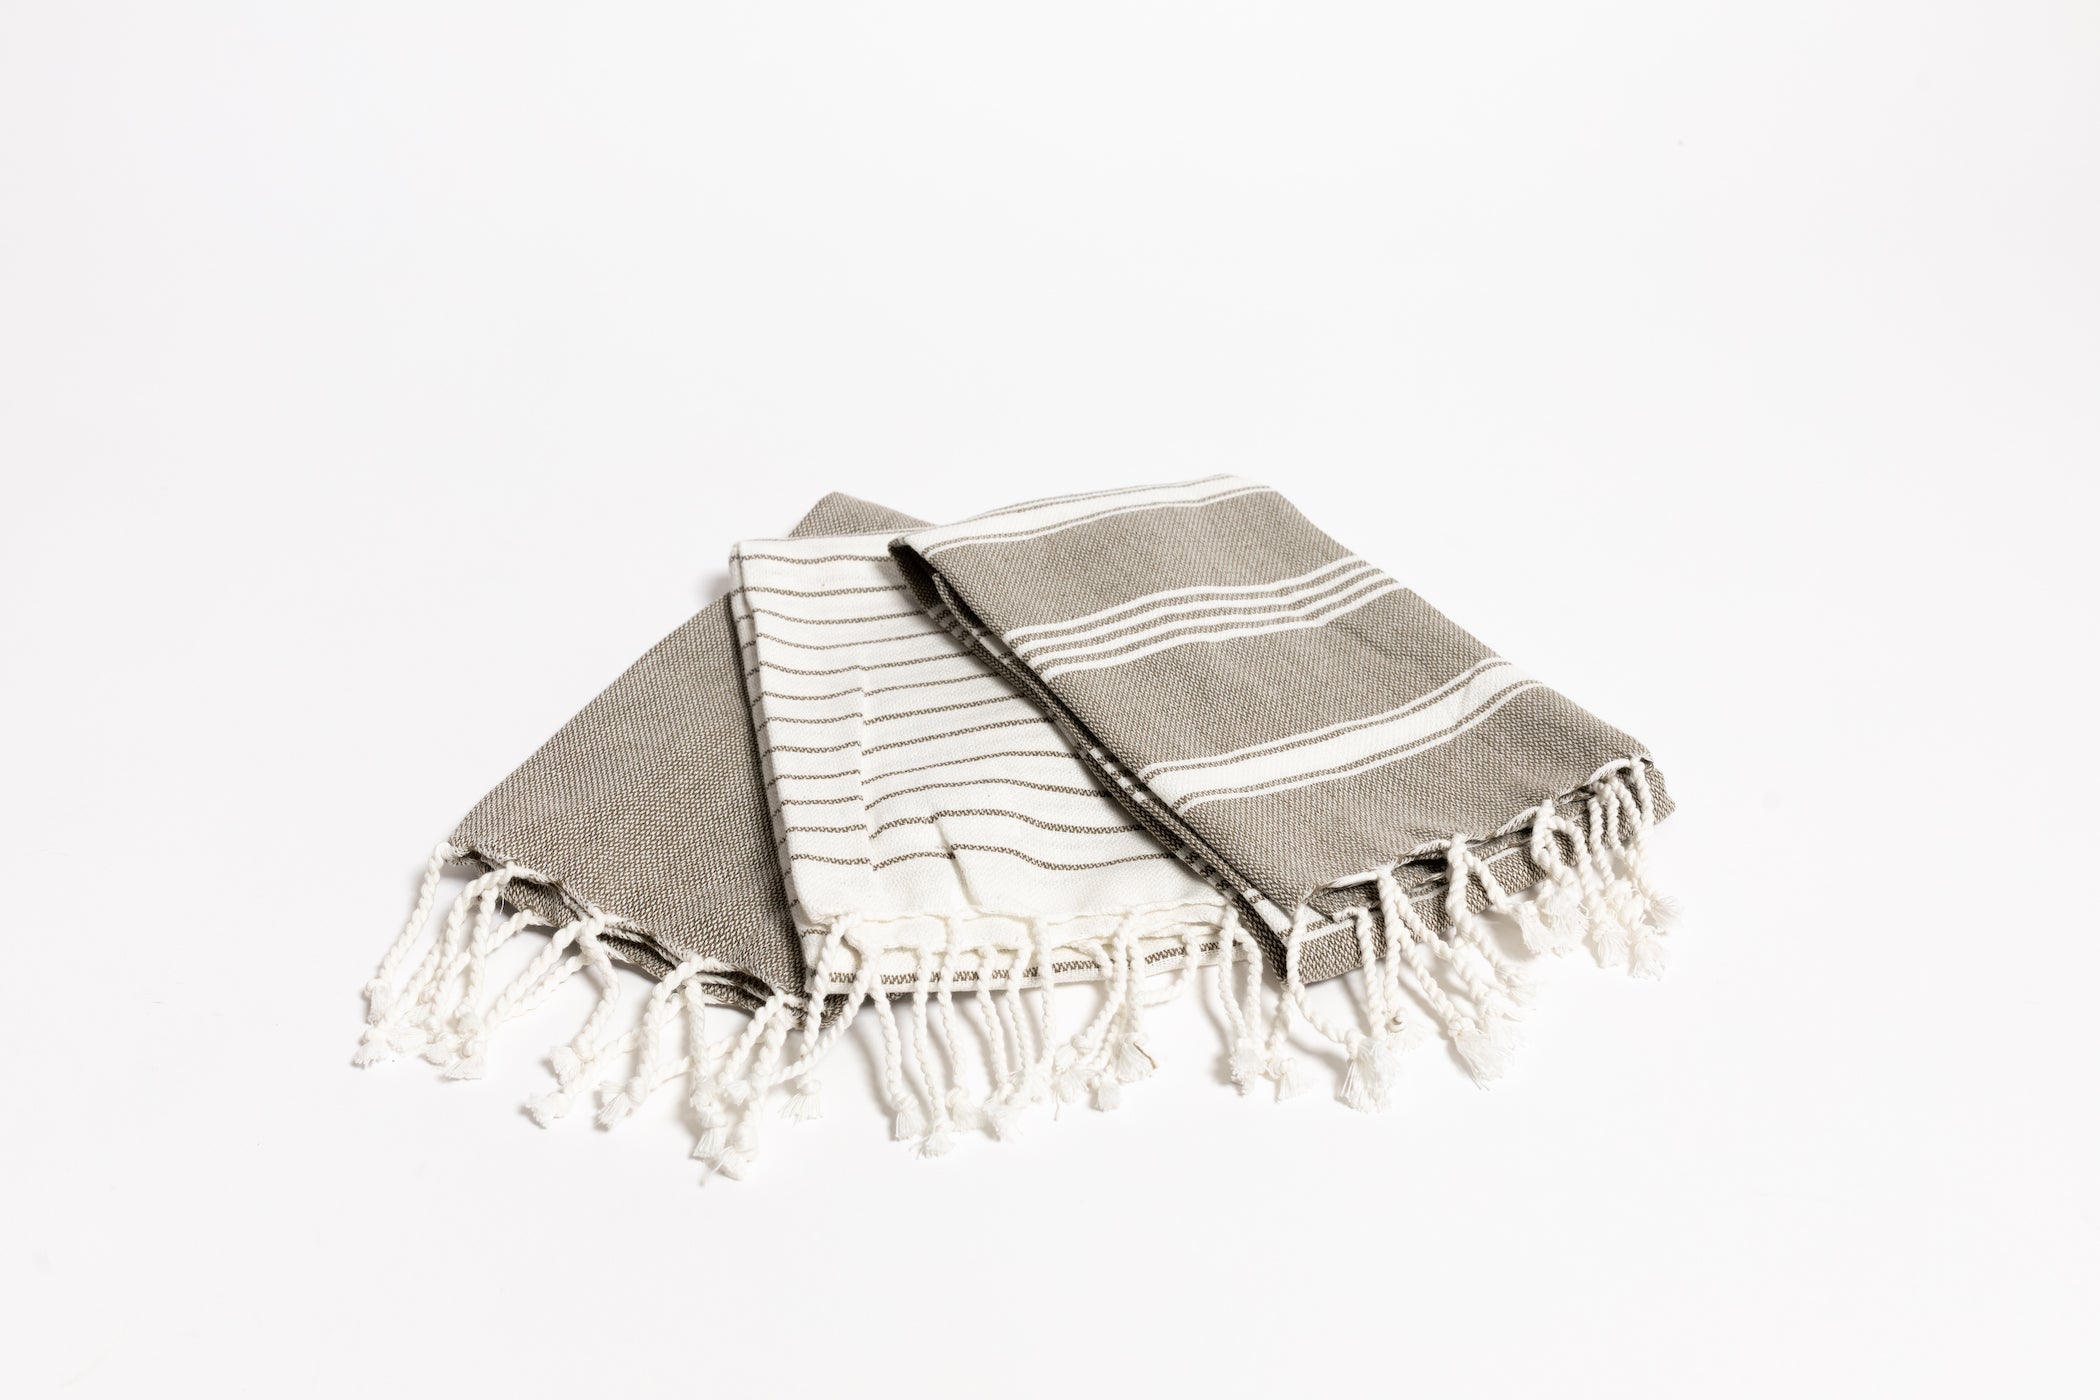 Koba Woven Cotton Striped Tea Towel w Tassels - Grey + White